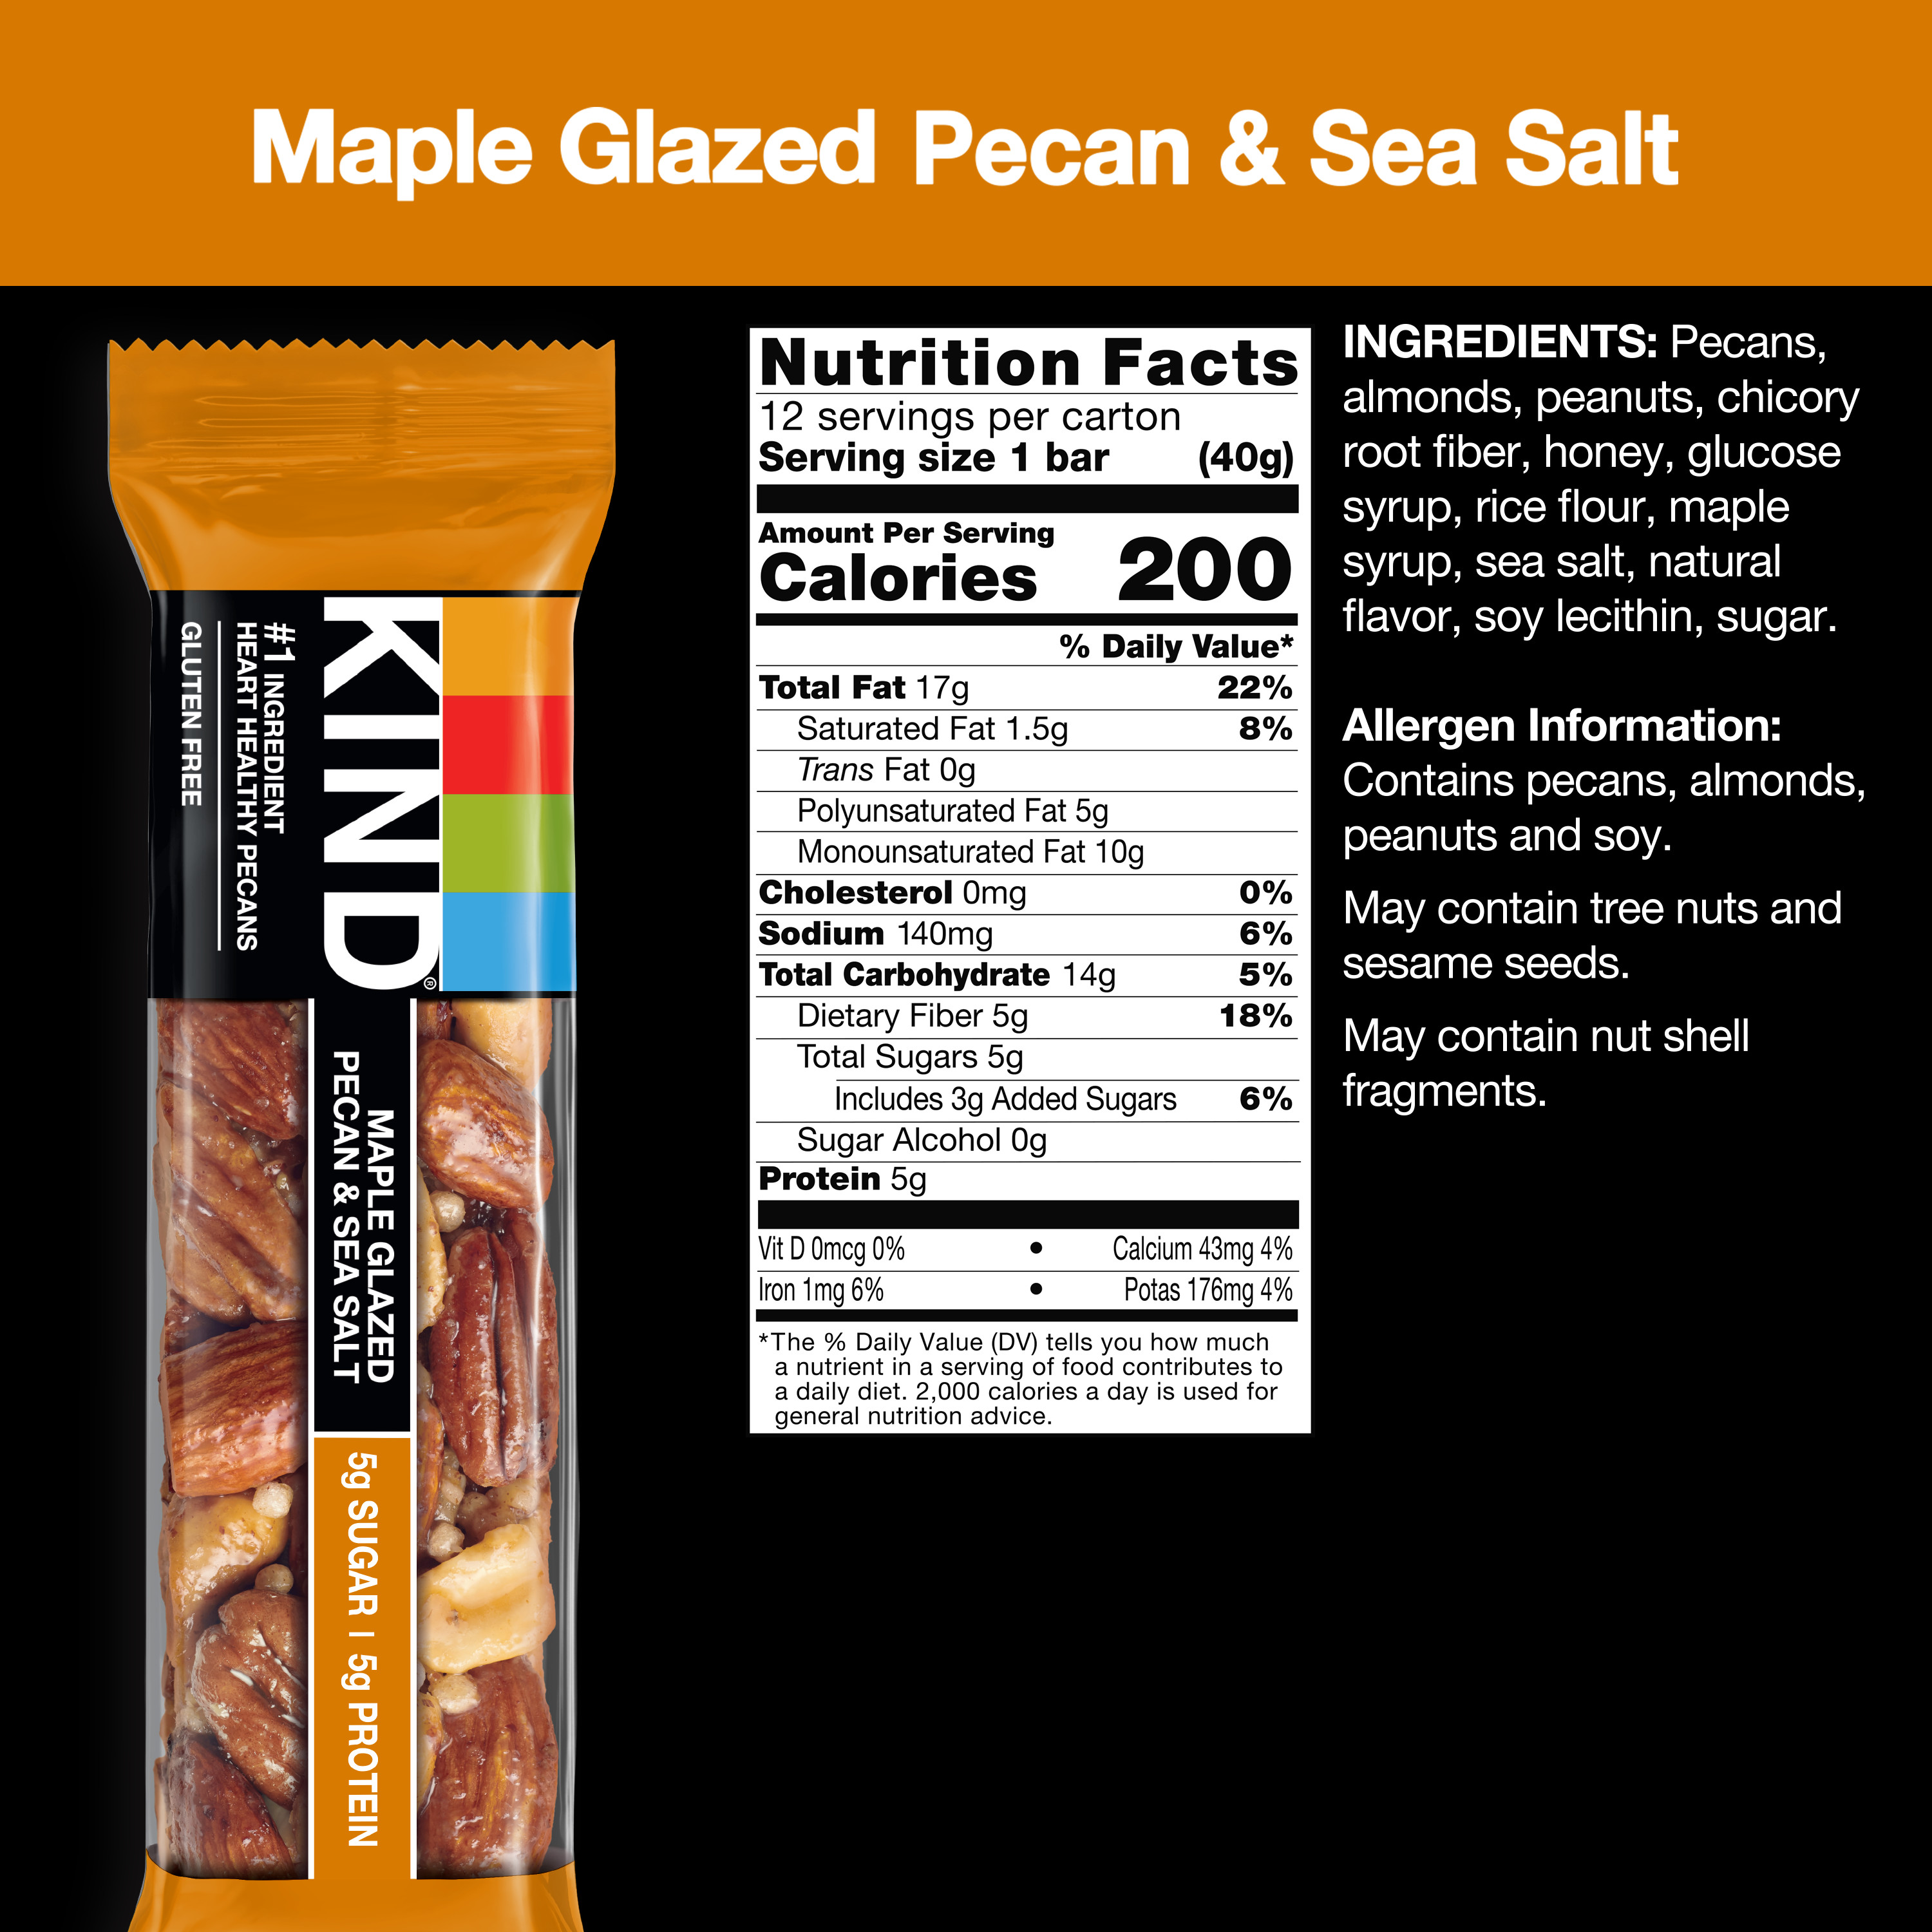 KIND Gluten Free Ready to Eat Maple Glazed Pecan & Sea Salt Snack Bars, 1.4 oz, 12 Count Box - image 3 of 10